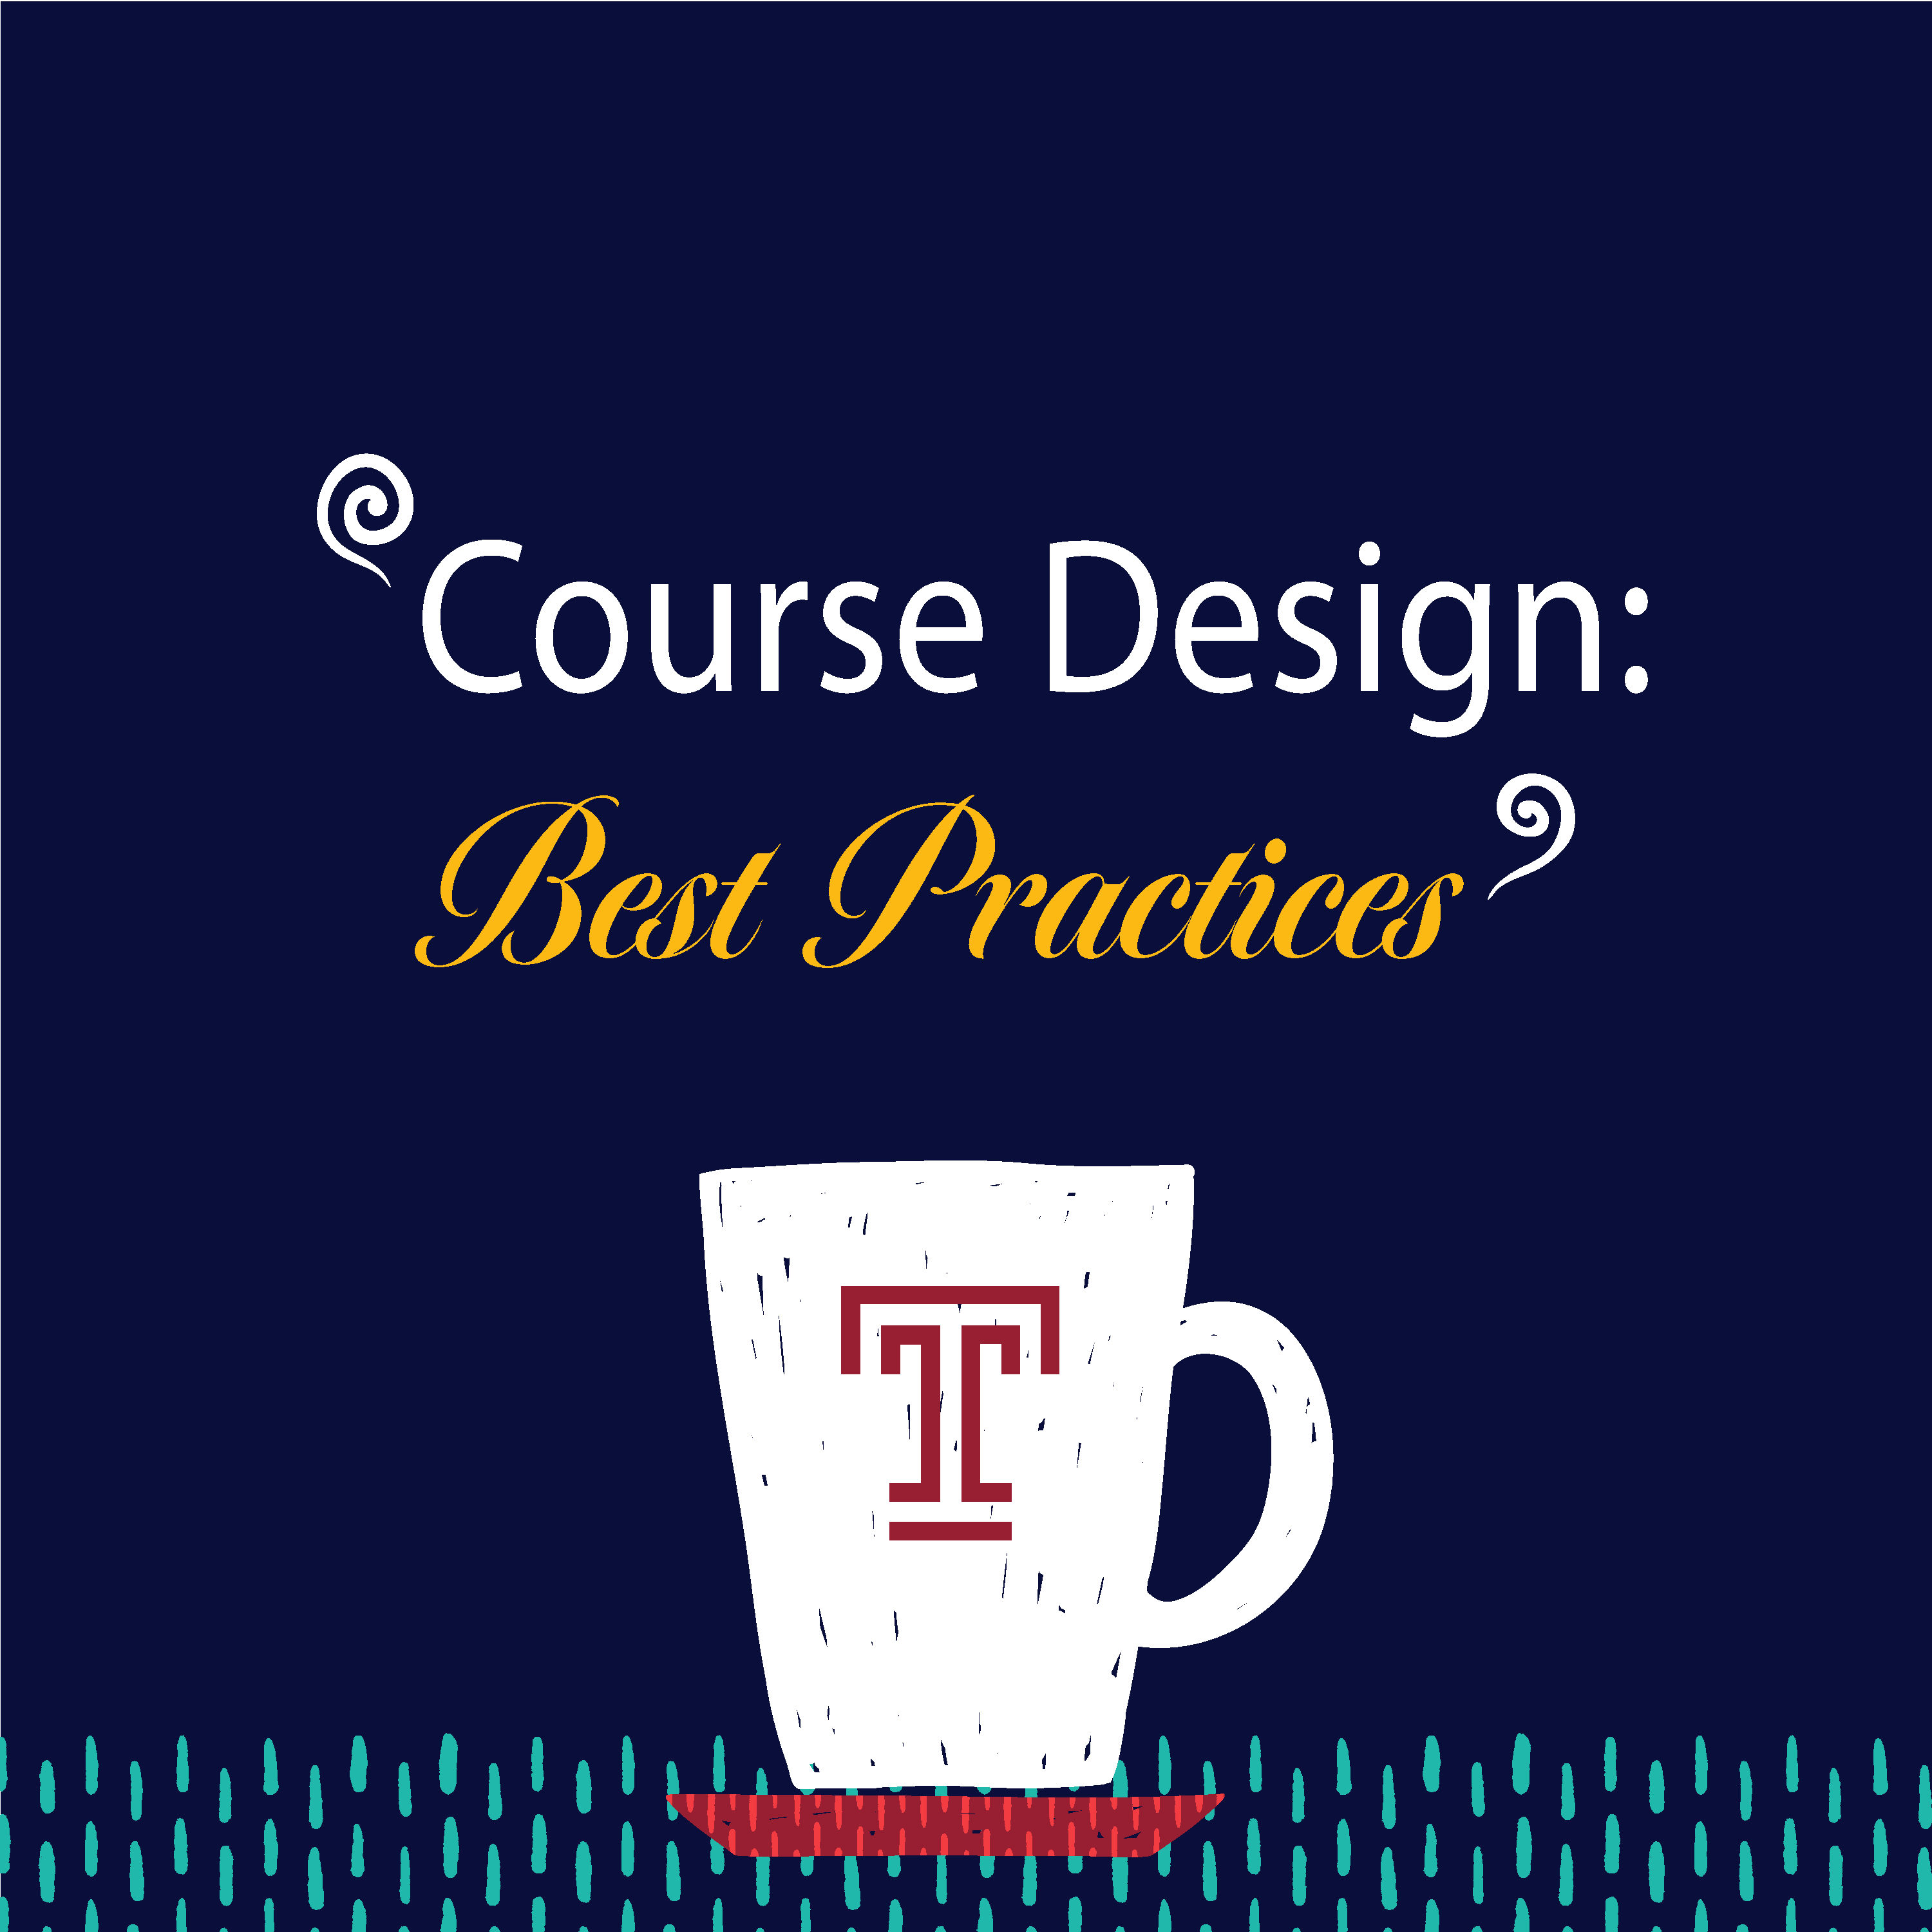 Course Design: Best Practices